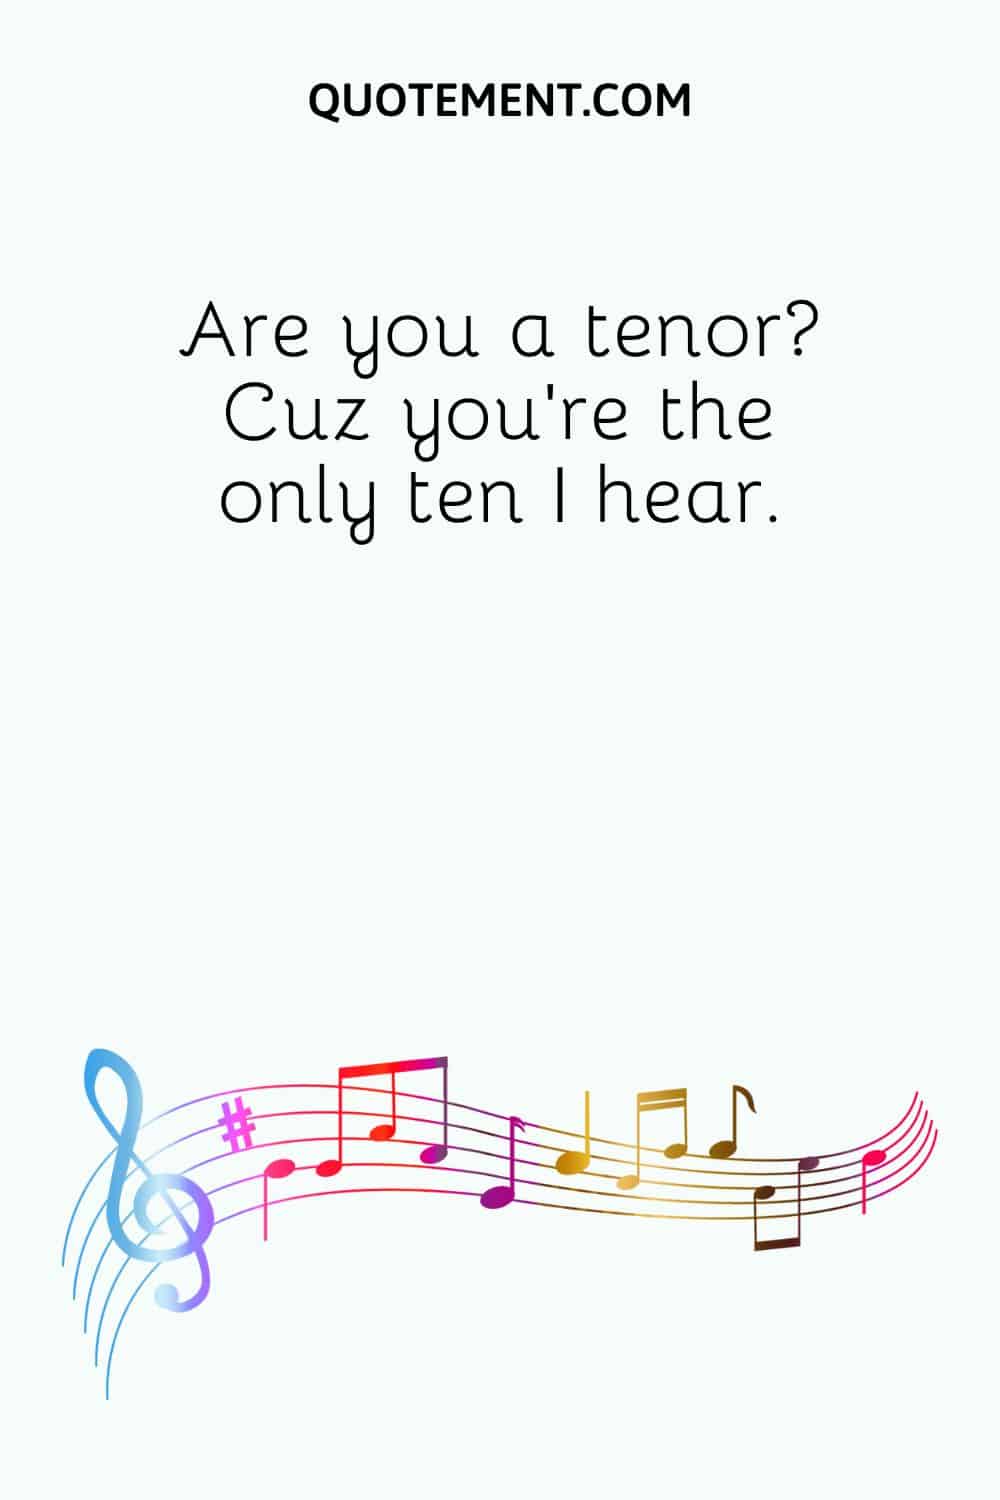 Are you a tenor Cuz you're the only ten I hear